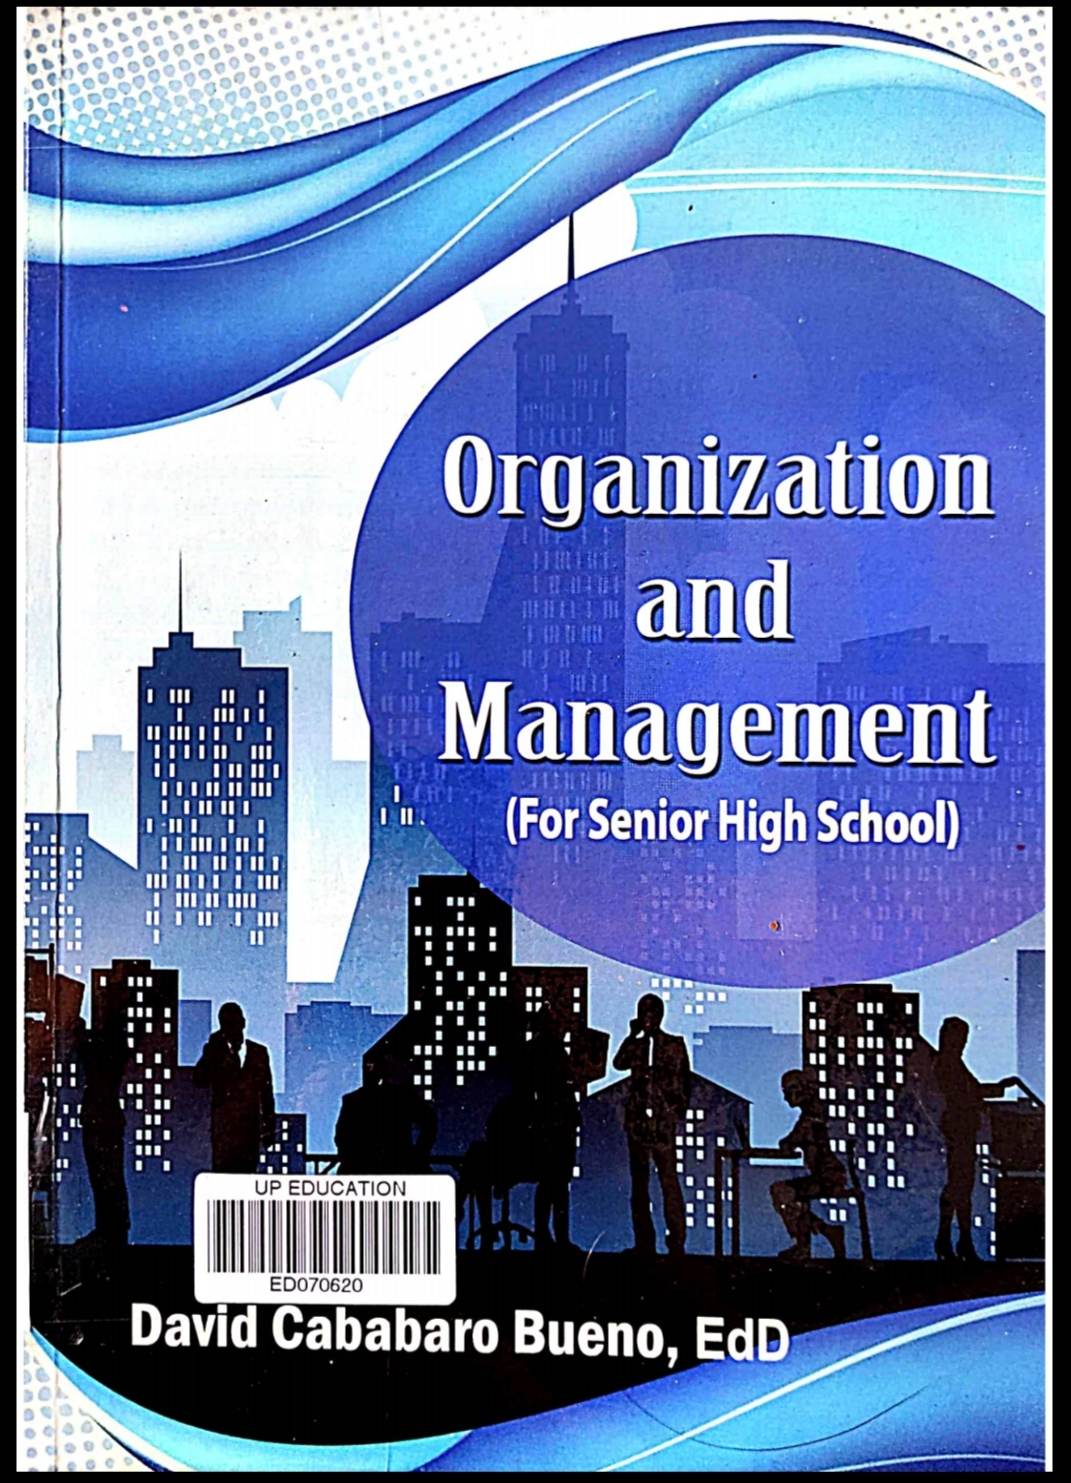 Organization and management